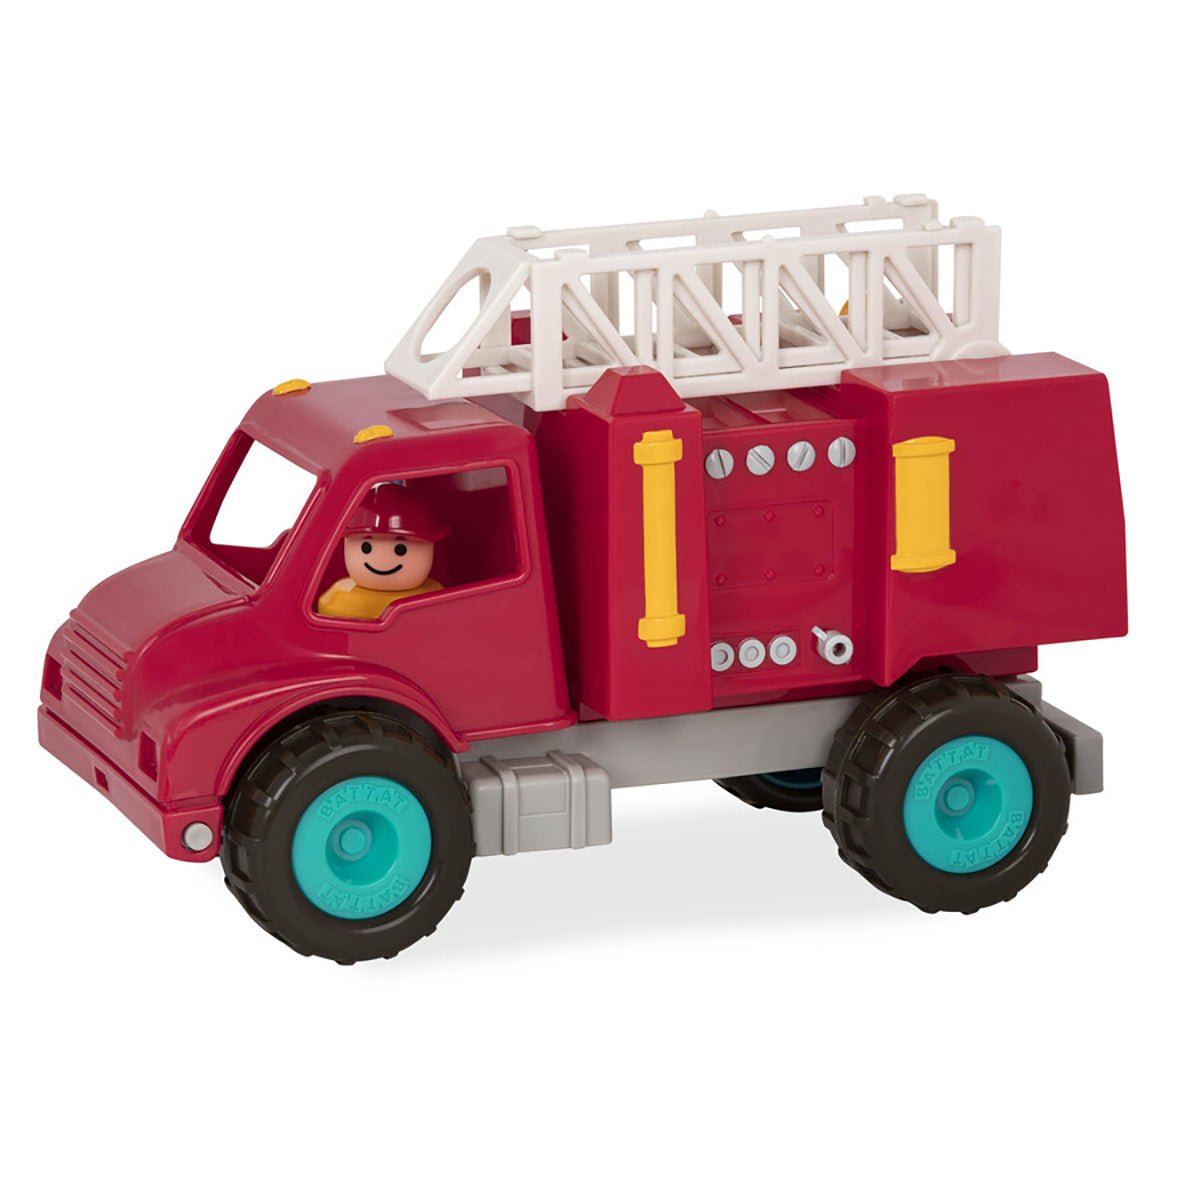 Battat Fire Truck | Battat toys